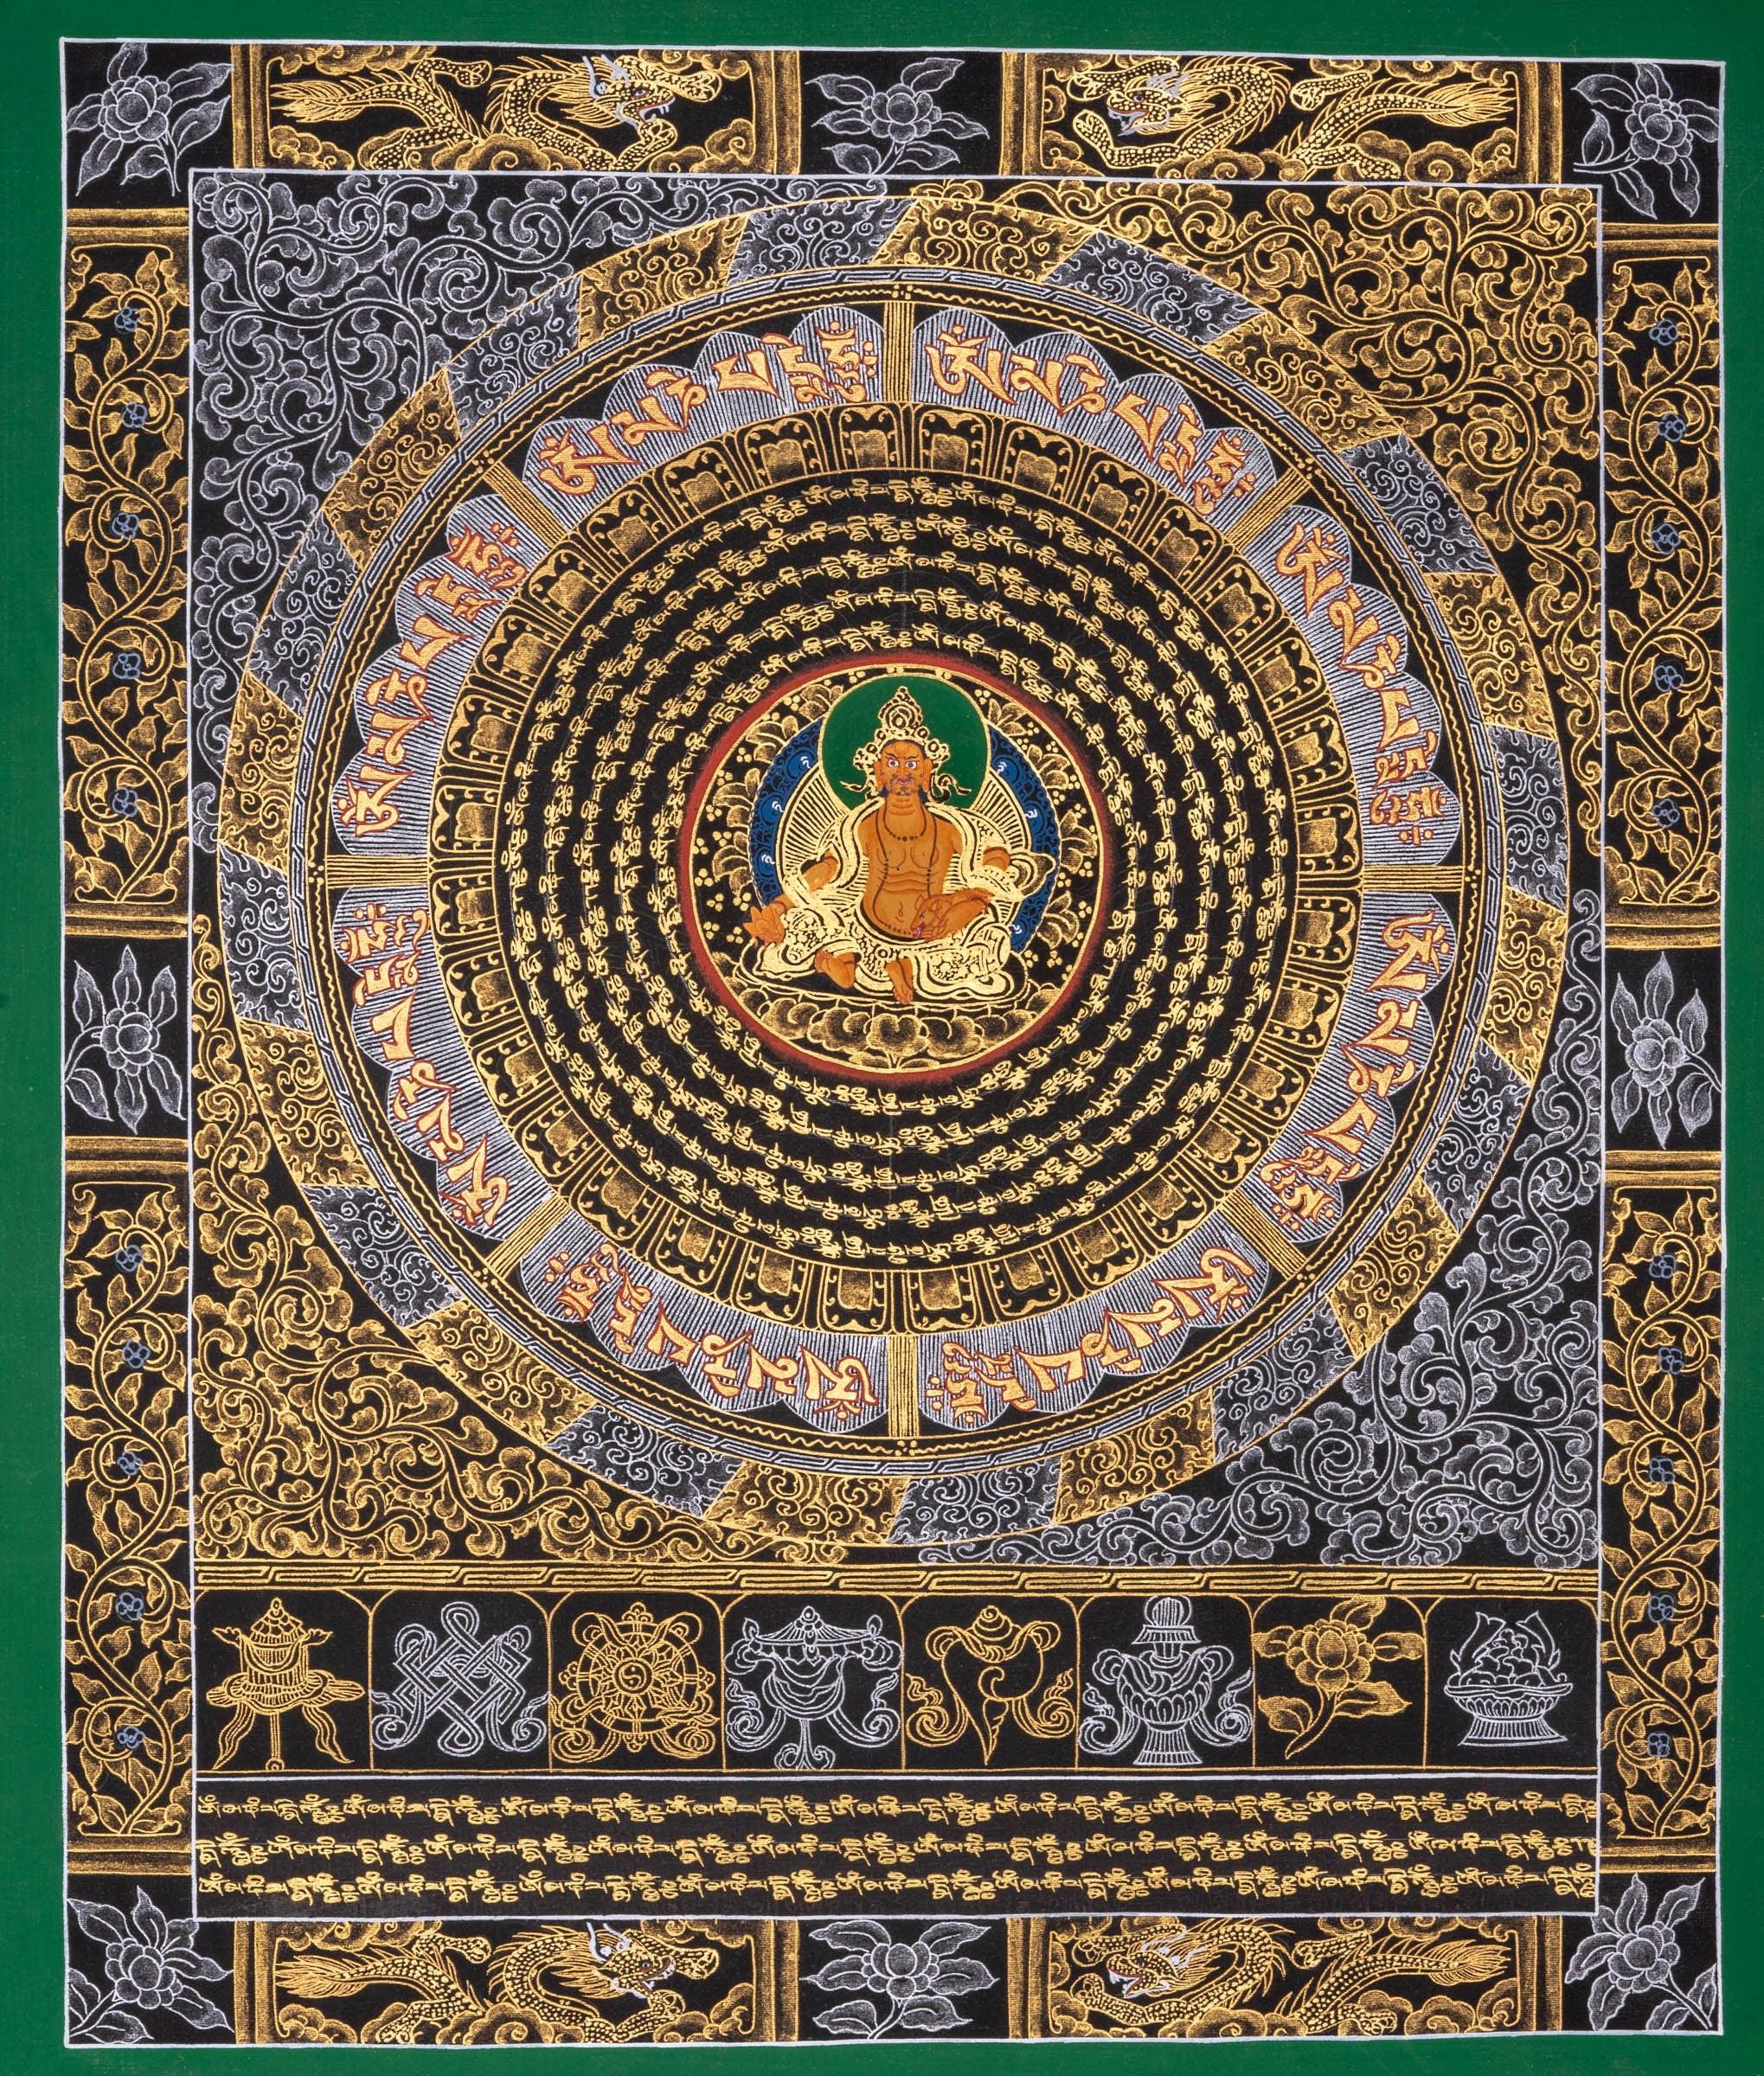 Kuber Mantra Mandala Thangka Painting - Himalayas Shop